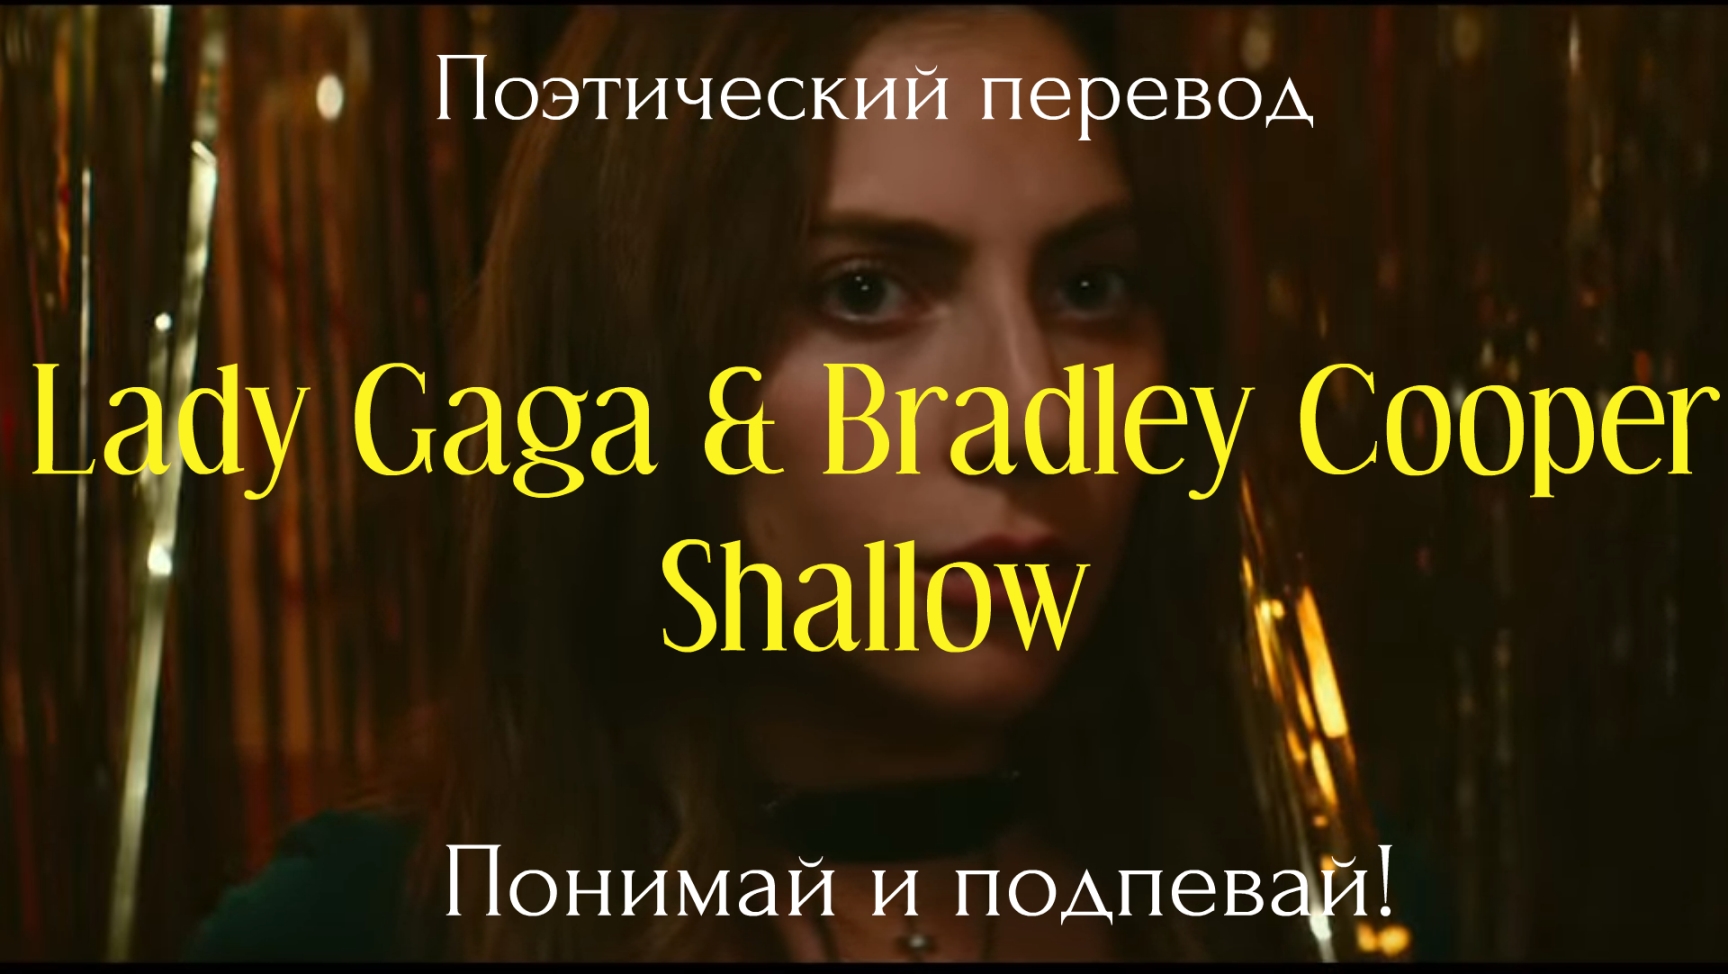 Lady Gaga, Bradley Cooper shallow перевод. Слова леди Гага и Брэдли Купер. Леди Гага и Брэдли Купер песня текст. Shallow перевод. Леди гага и брэдли перевод